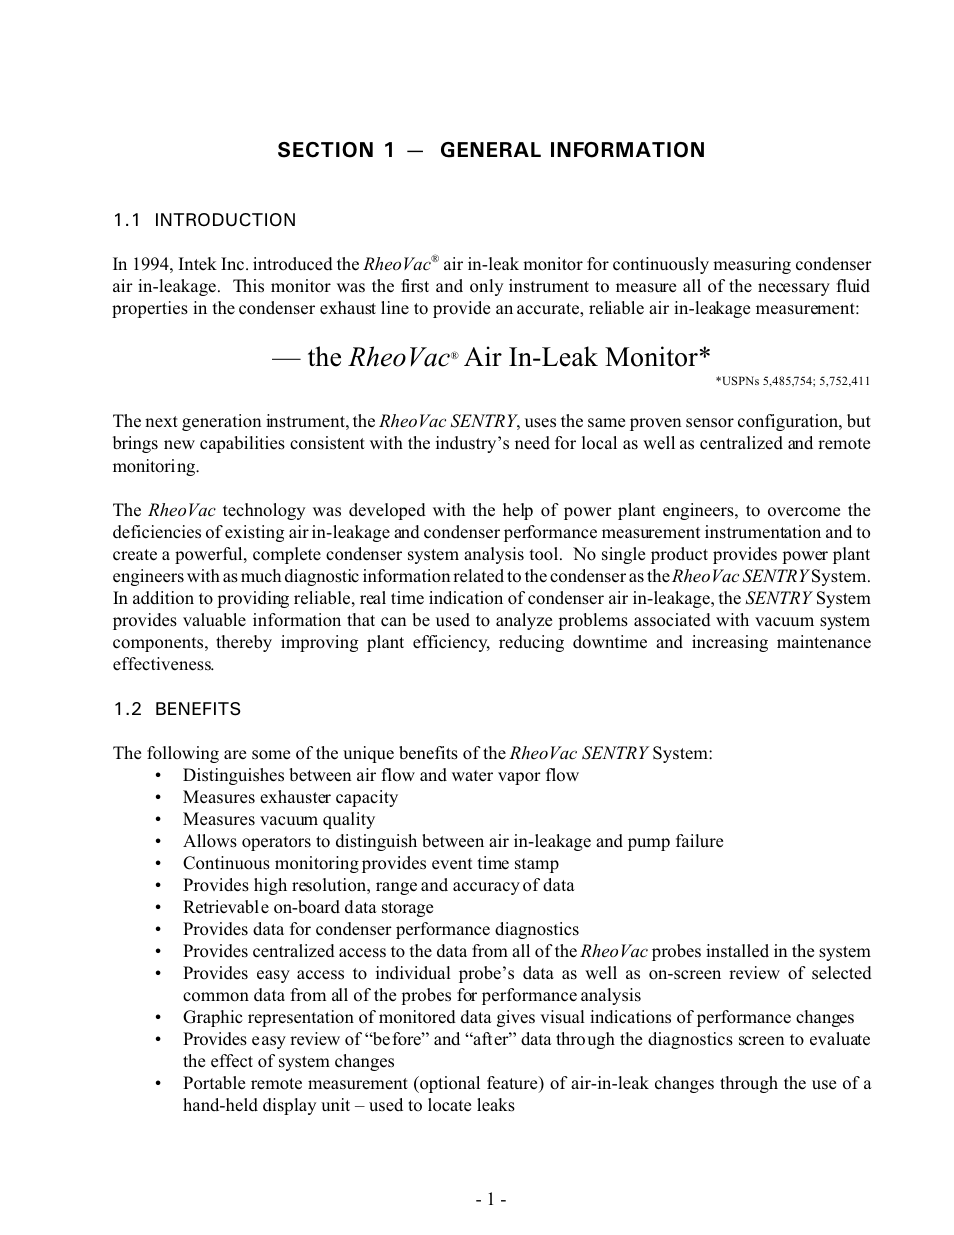 The rheovac, Air in-leak monitor | Intek RheoVac SENTRY User Manual | Page 3 / 27